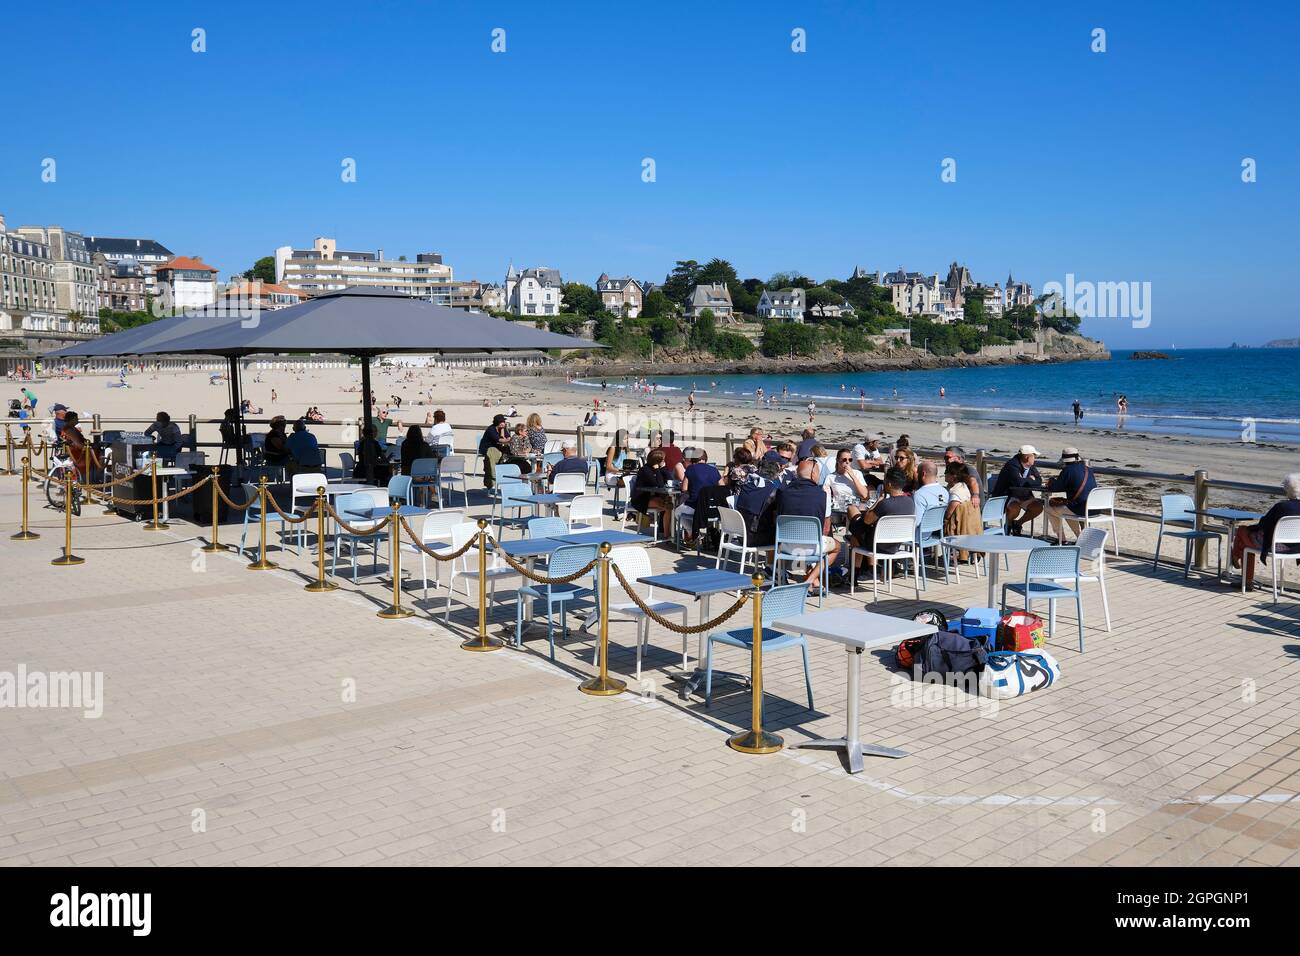 France, Ille et Vilaine, Cote d'Emeraude (Emerald Coast), Dinard, bar terrace on the Ecluse beach Stock Photo